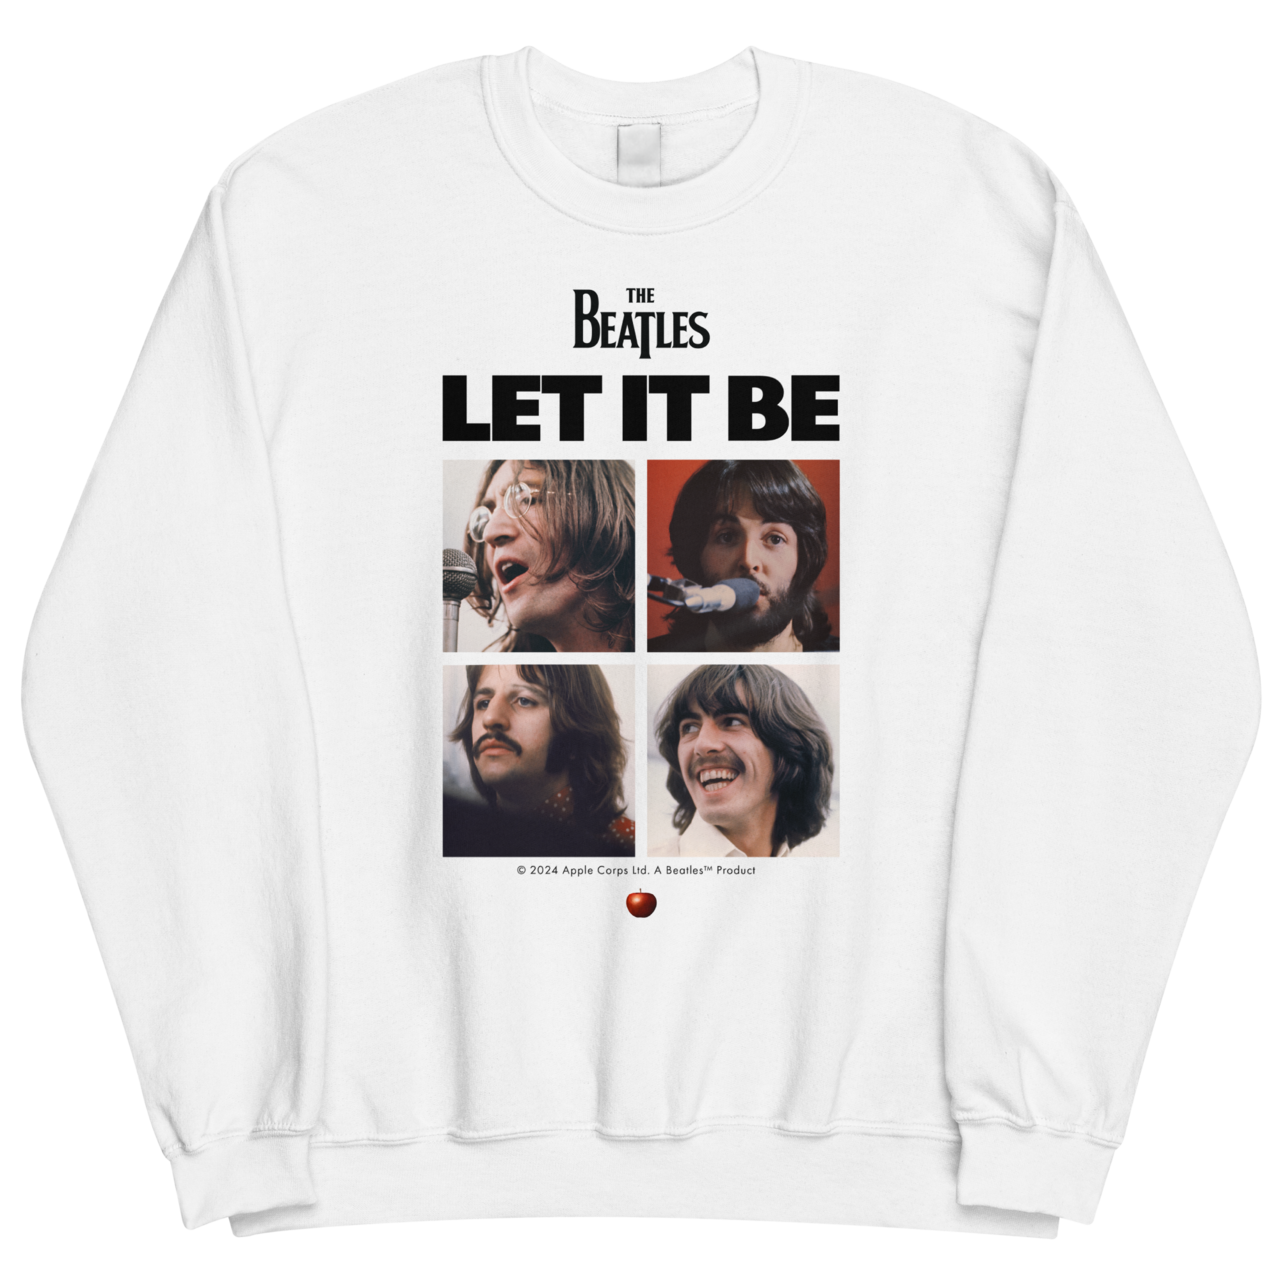 The Beatles - Let It Be Album Graphic White Crewneck Sweatshirt